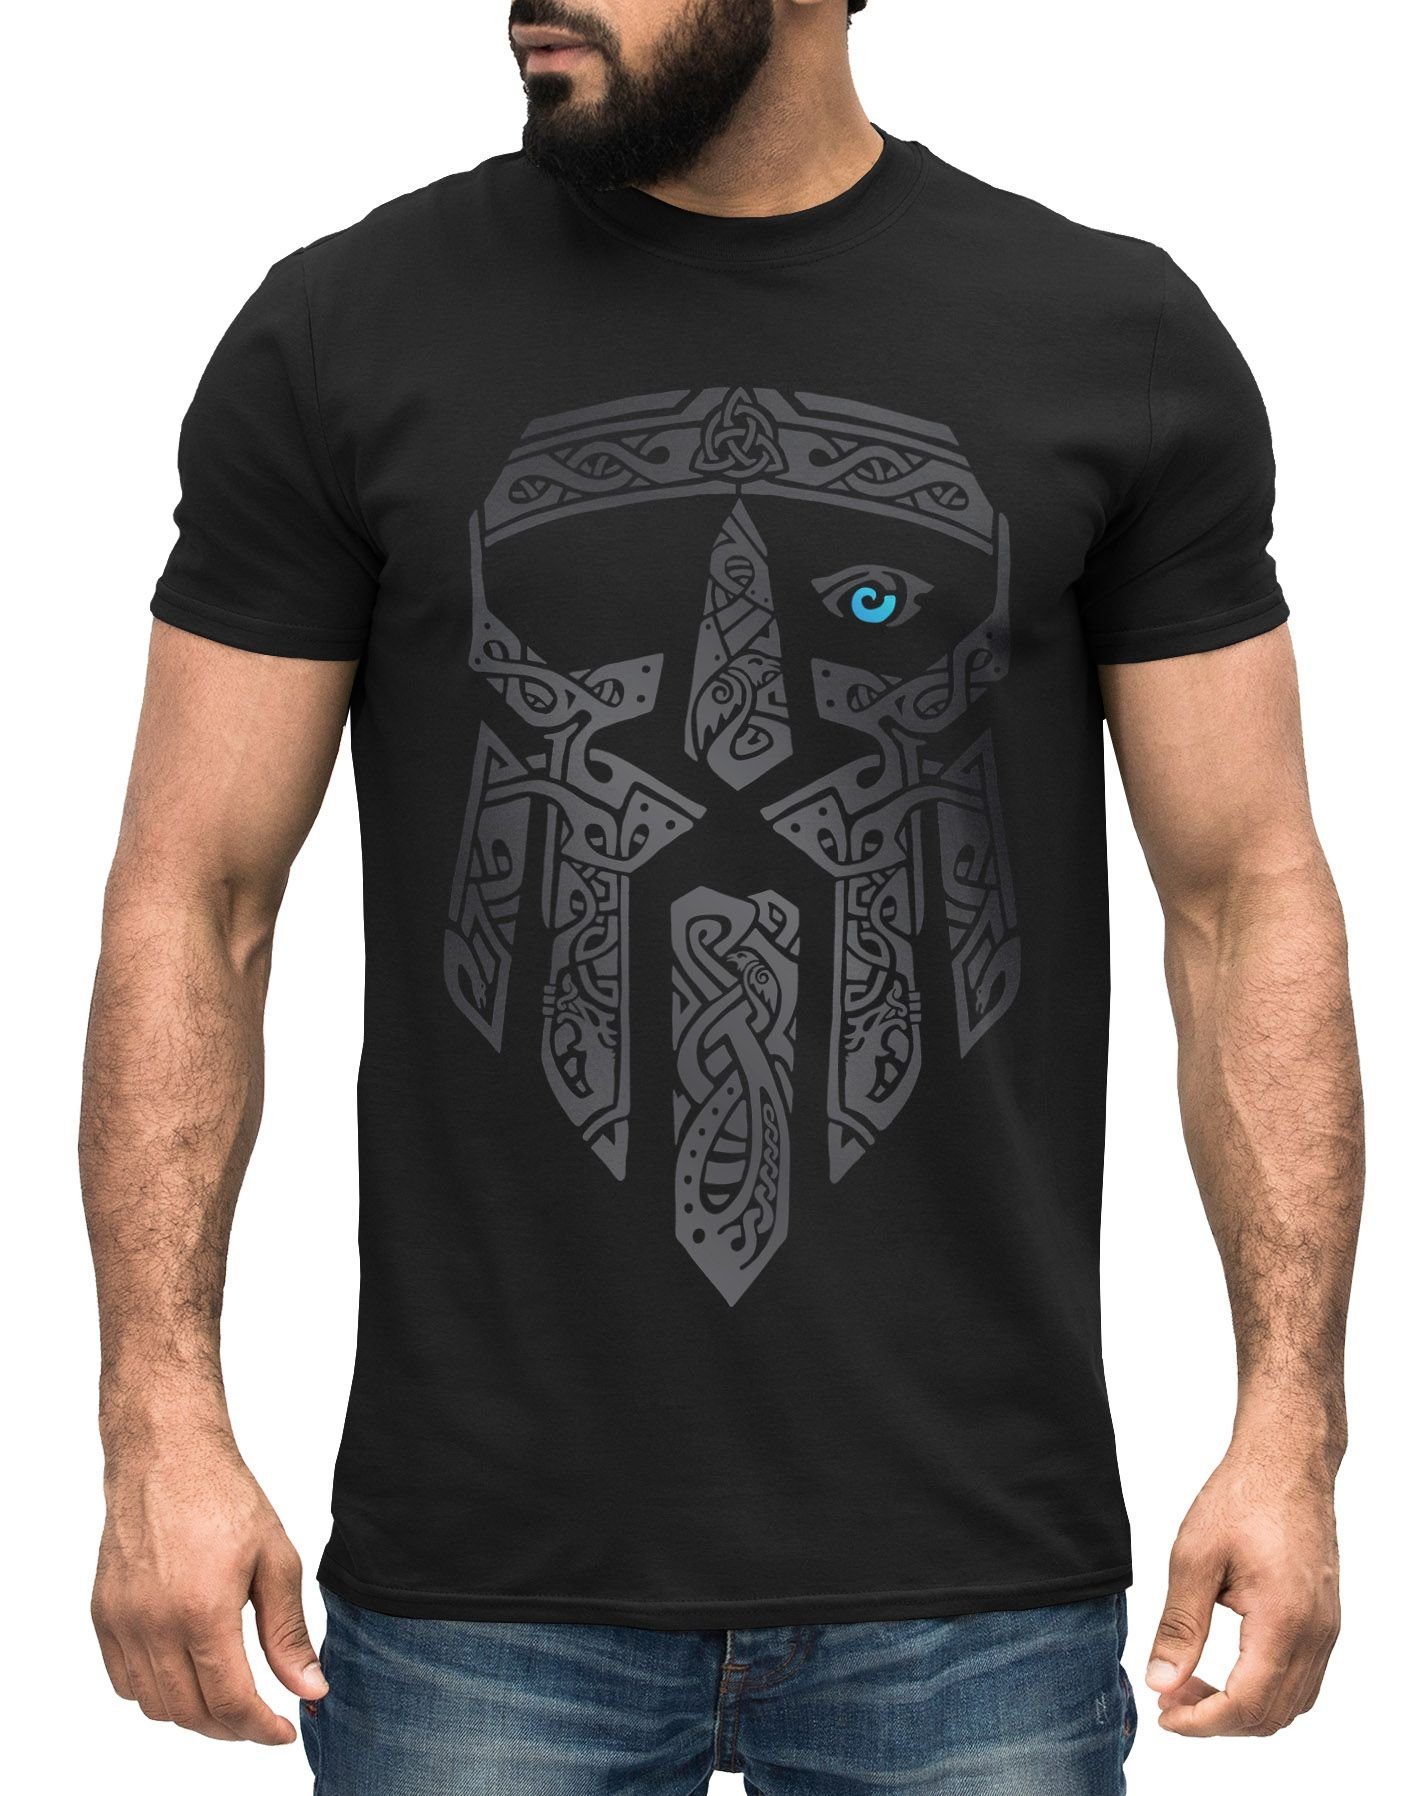 Valhalla Neverless® Neverless Print Print-Shirt Mythologie Odin Wotan Gott Nordmänner mit Wikinger T-Shirt Herren